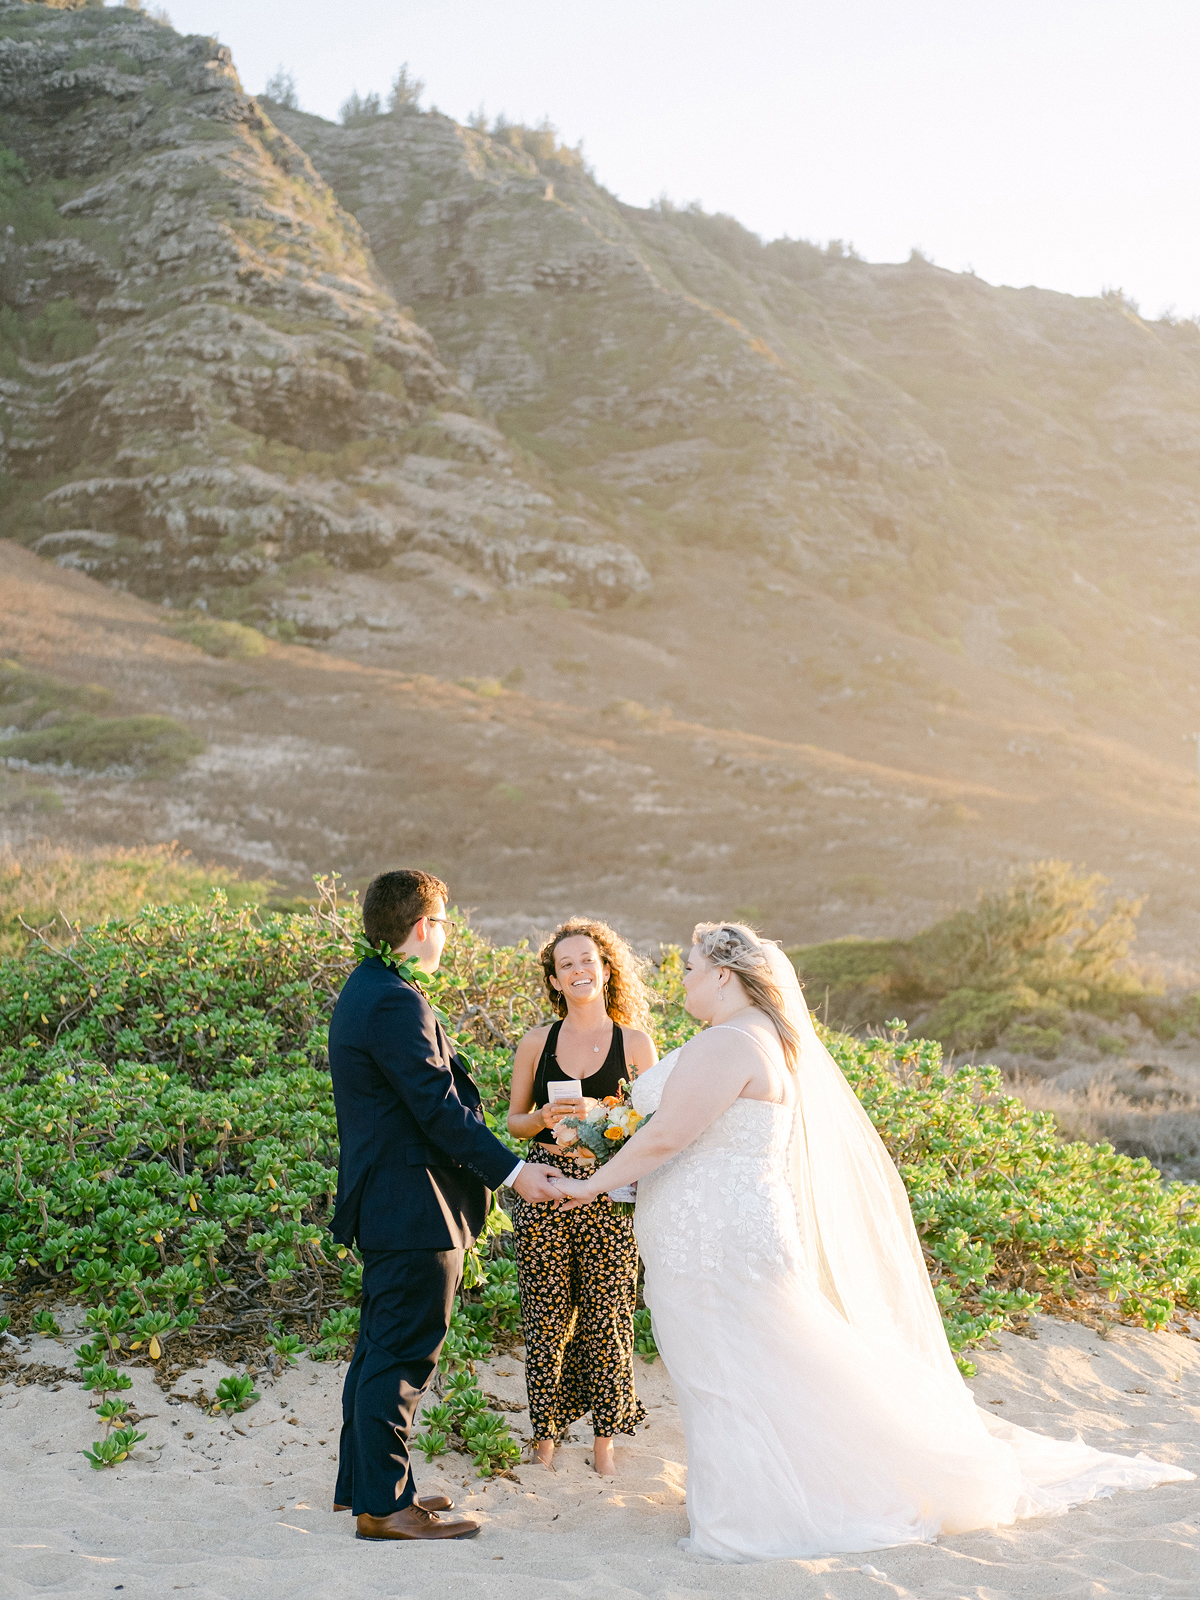 Oahu north shore elopement by Laura Ivanova Photography